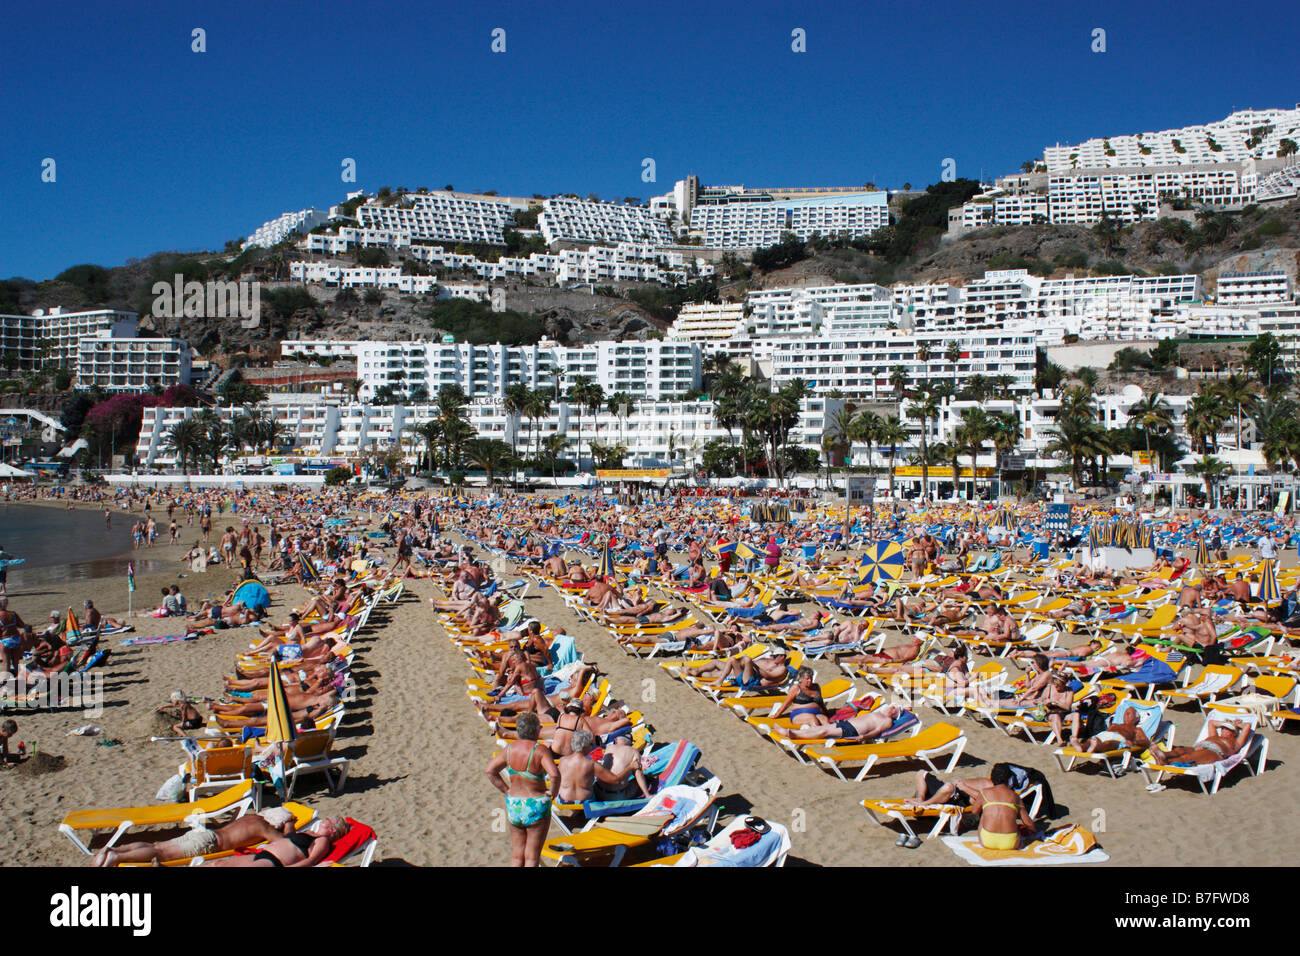 Puerto rico beach on gran fotografías e imágenes de alta resolución - Alamy